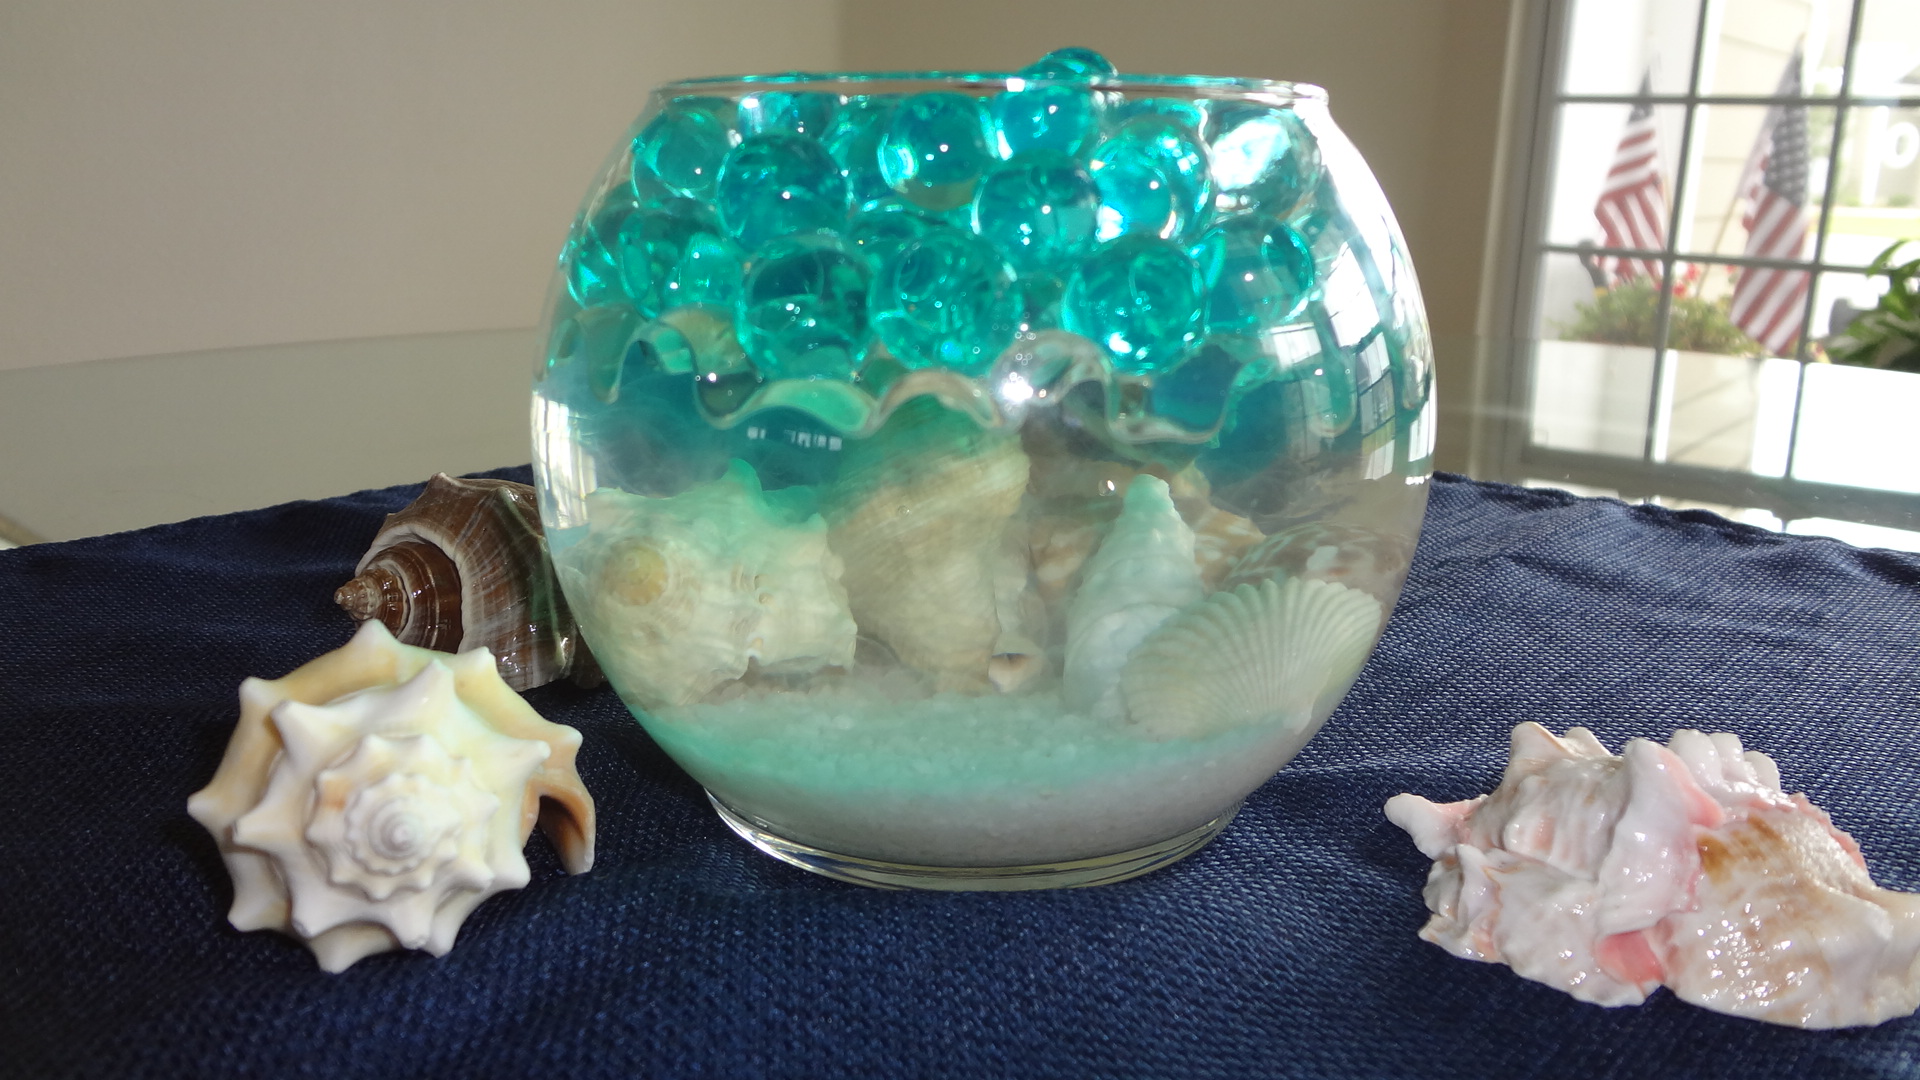 water bead vase with seashells - Water Beads Design